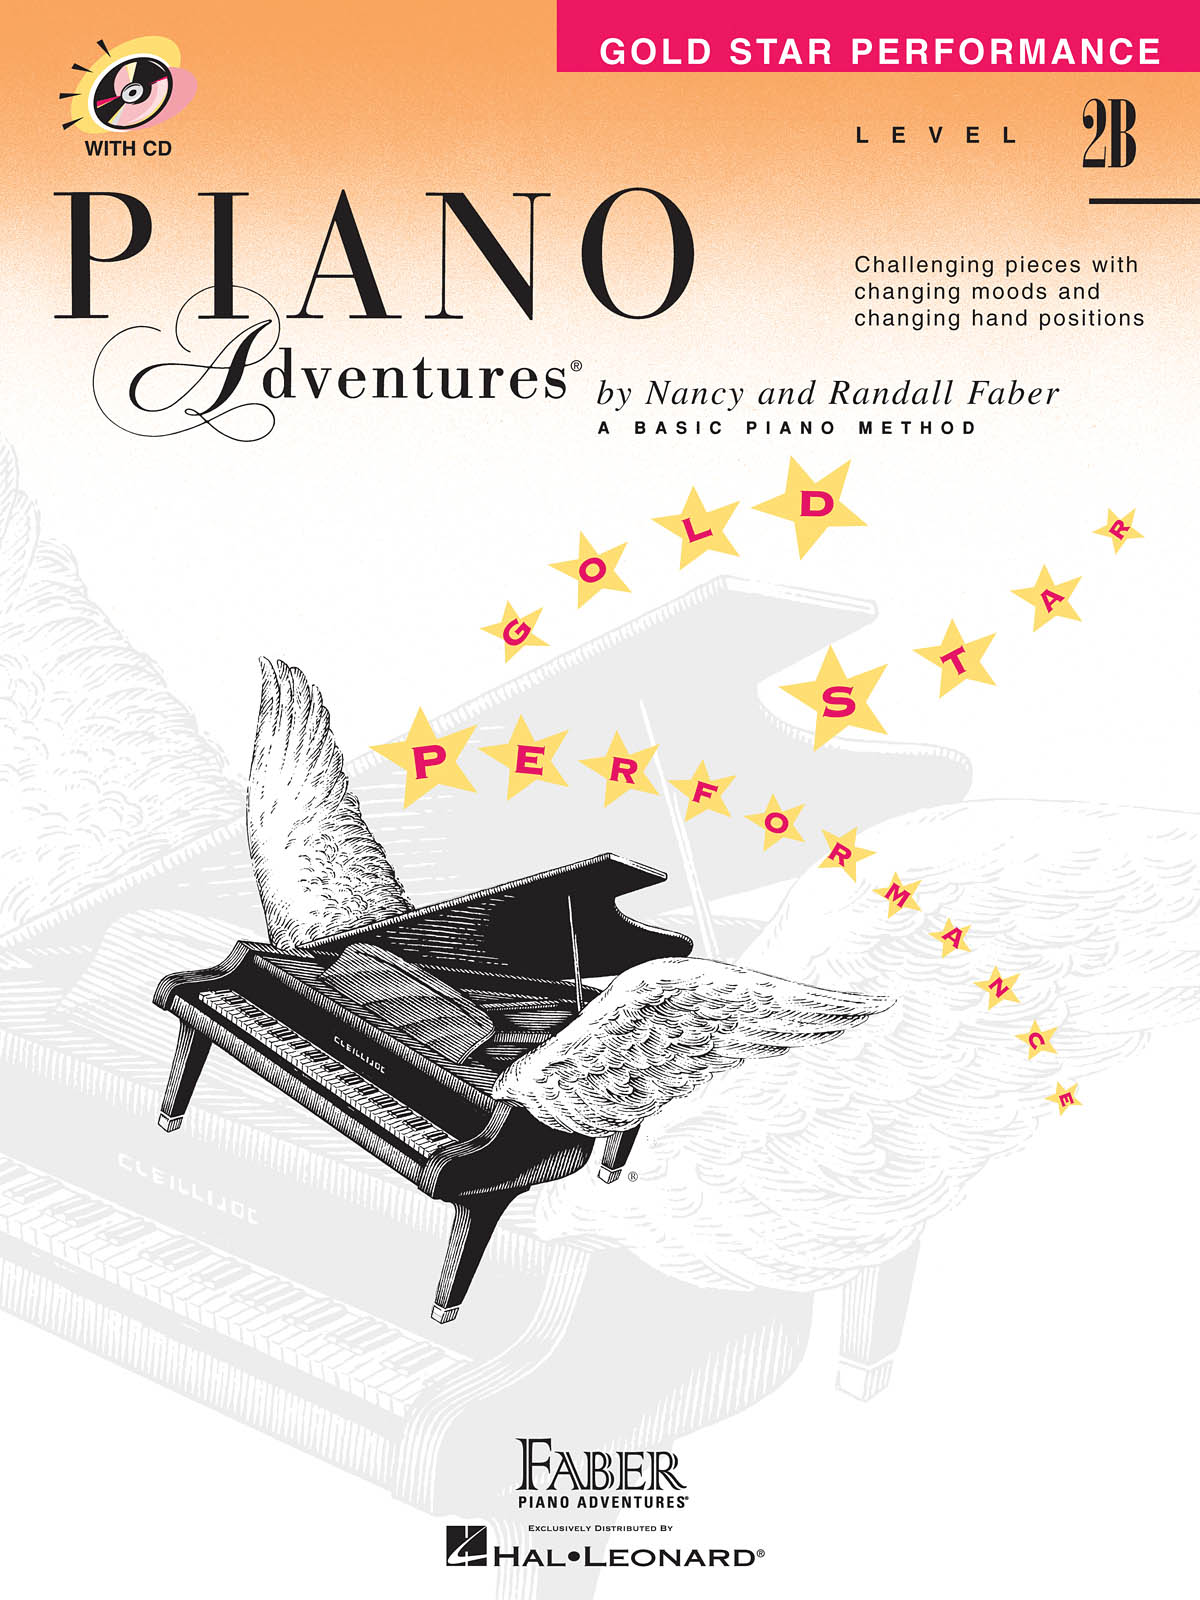 Level 2B - Gold Star Performance  - Piano Adventures® učebnice pro klavír